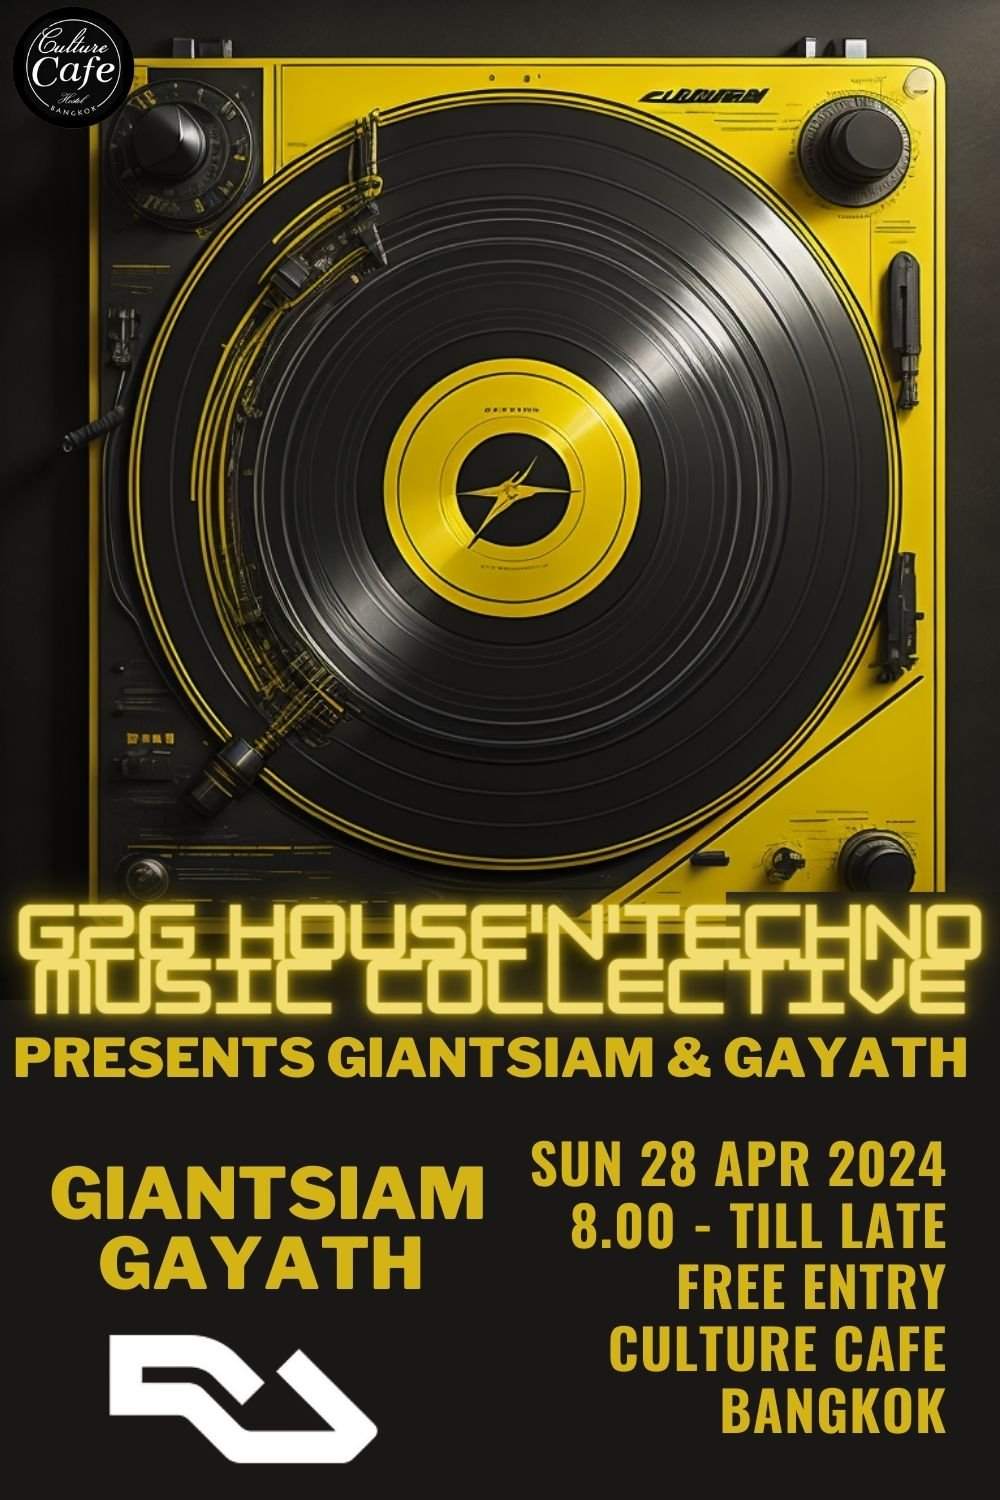 G2G House'n'Techno Music Collective presents; Giantsiam & Gayath - フライヤー表